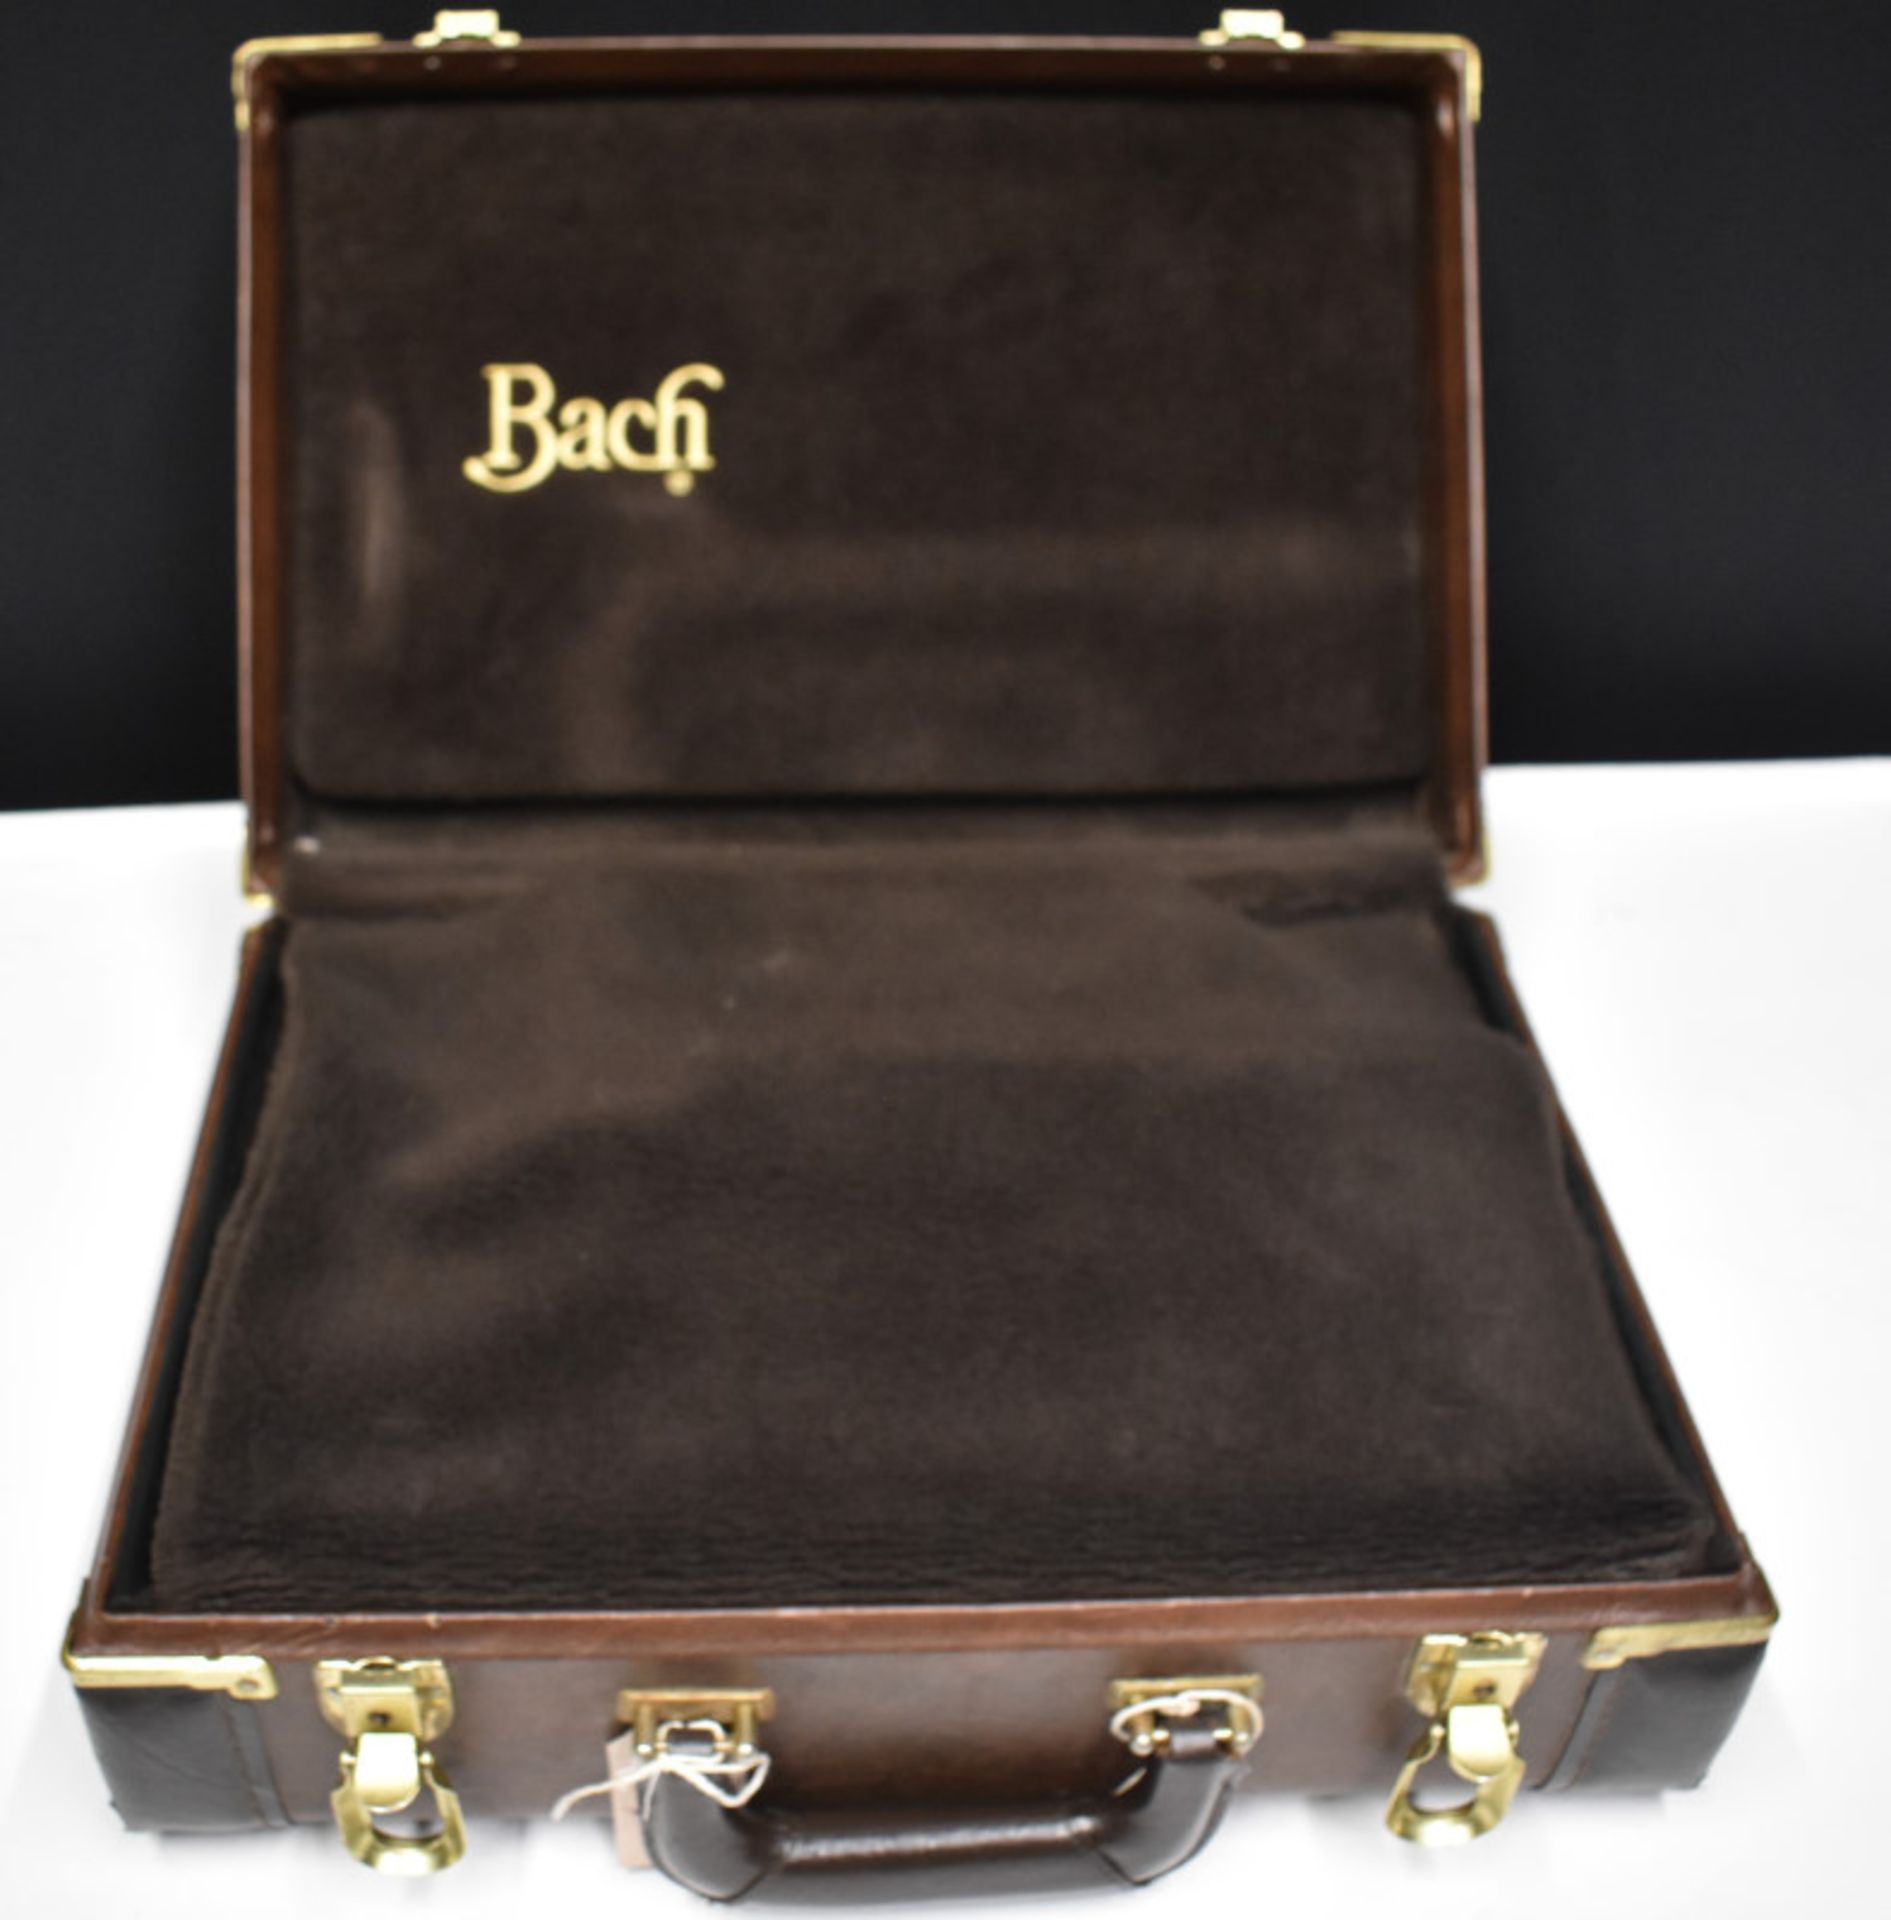 Bach Stradivarius Model 184 Cornet in case - Serial No. 501127 - Please check photos car - Image 12 of 15